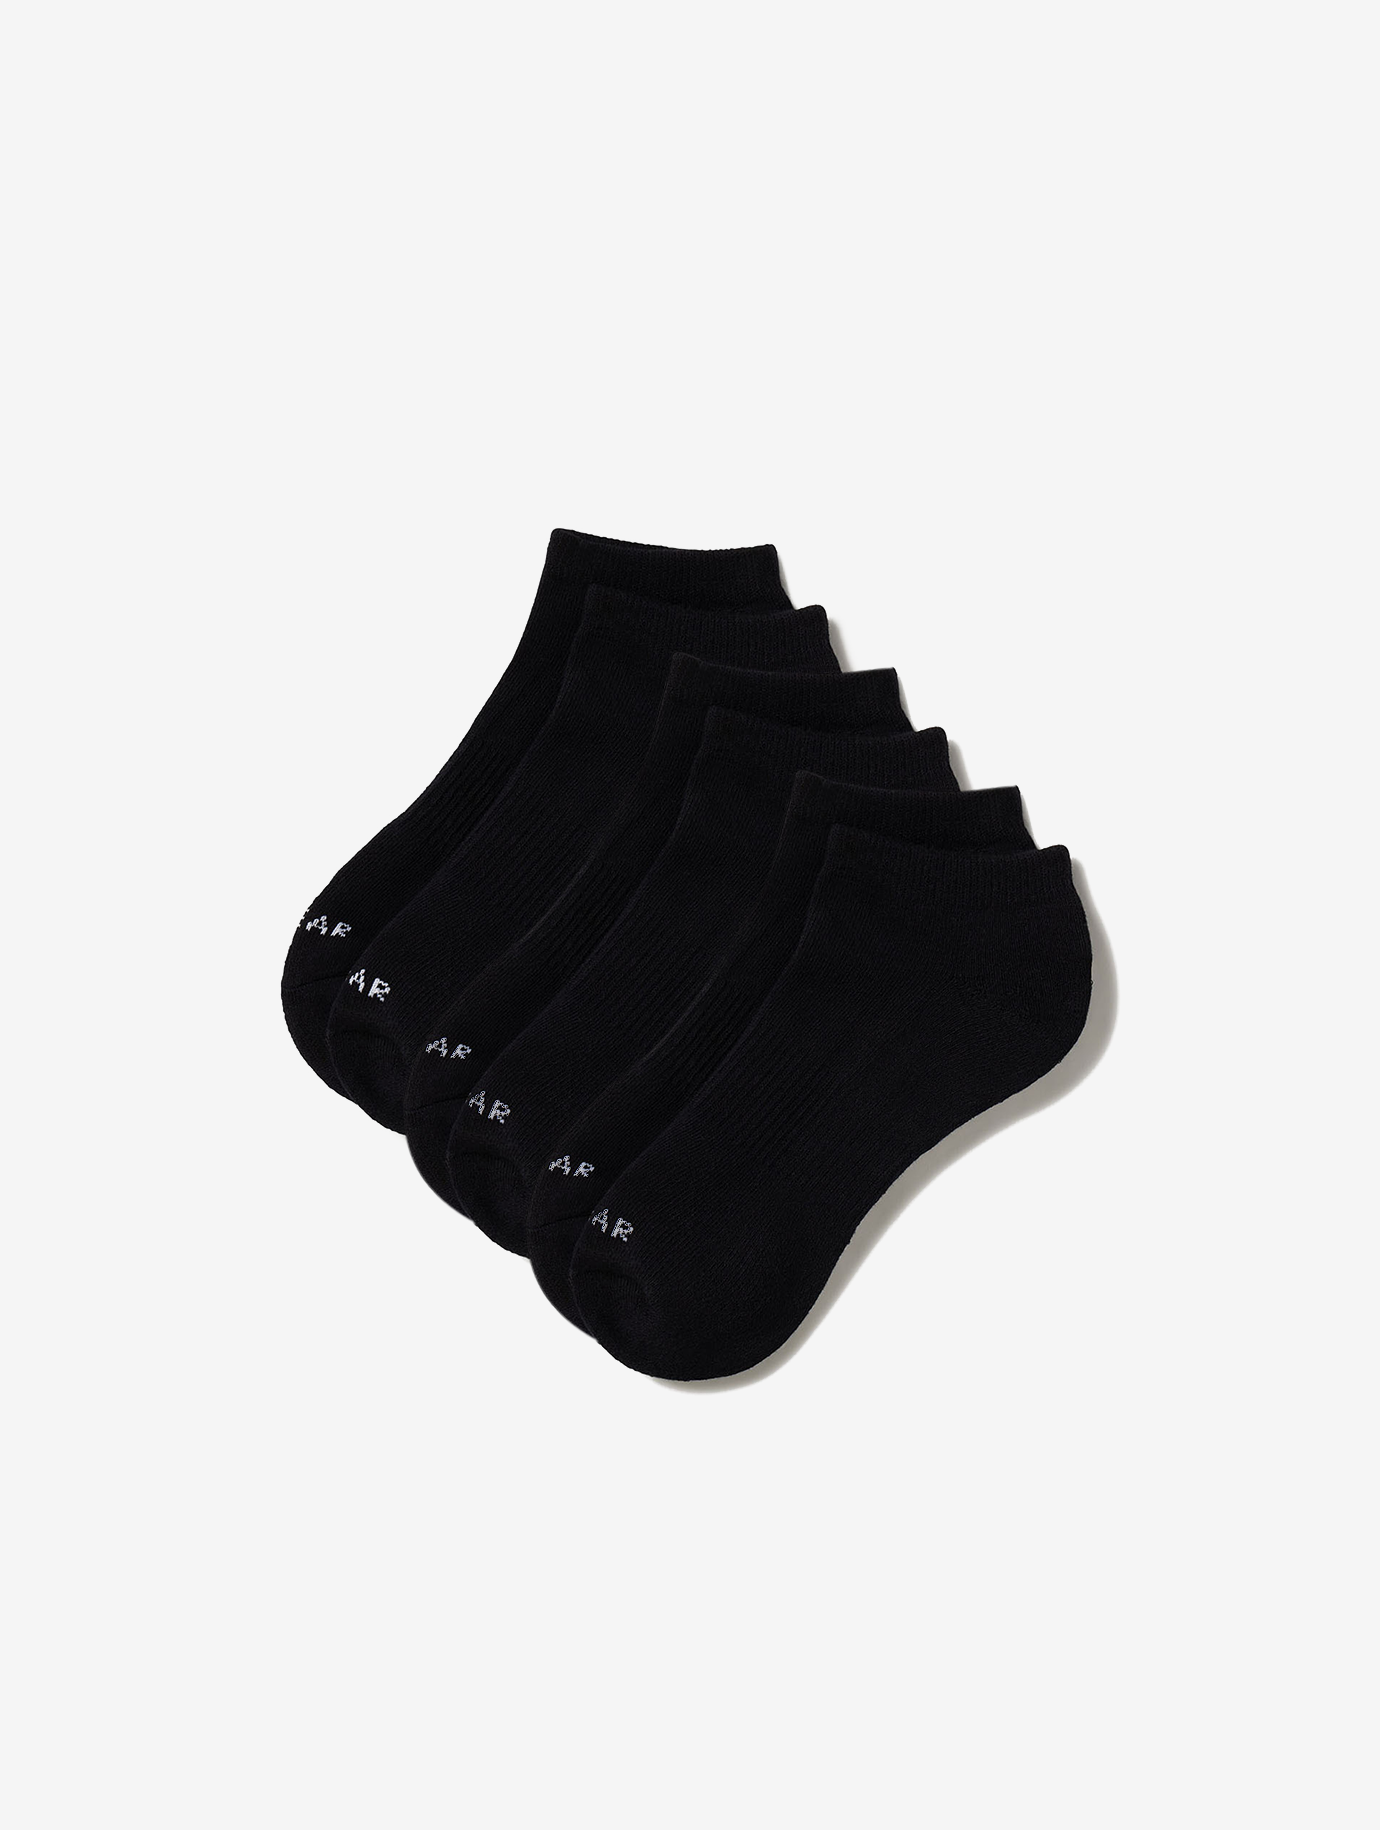 Allwear Organic Ankle Socks 3 Pack Bundle